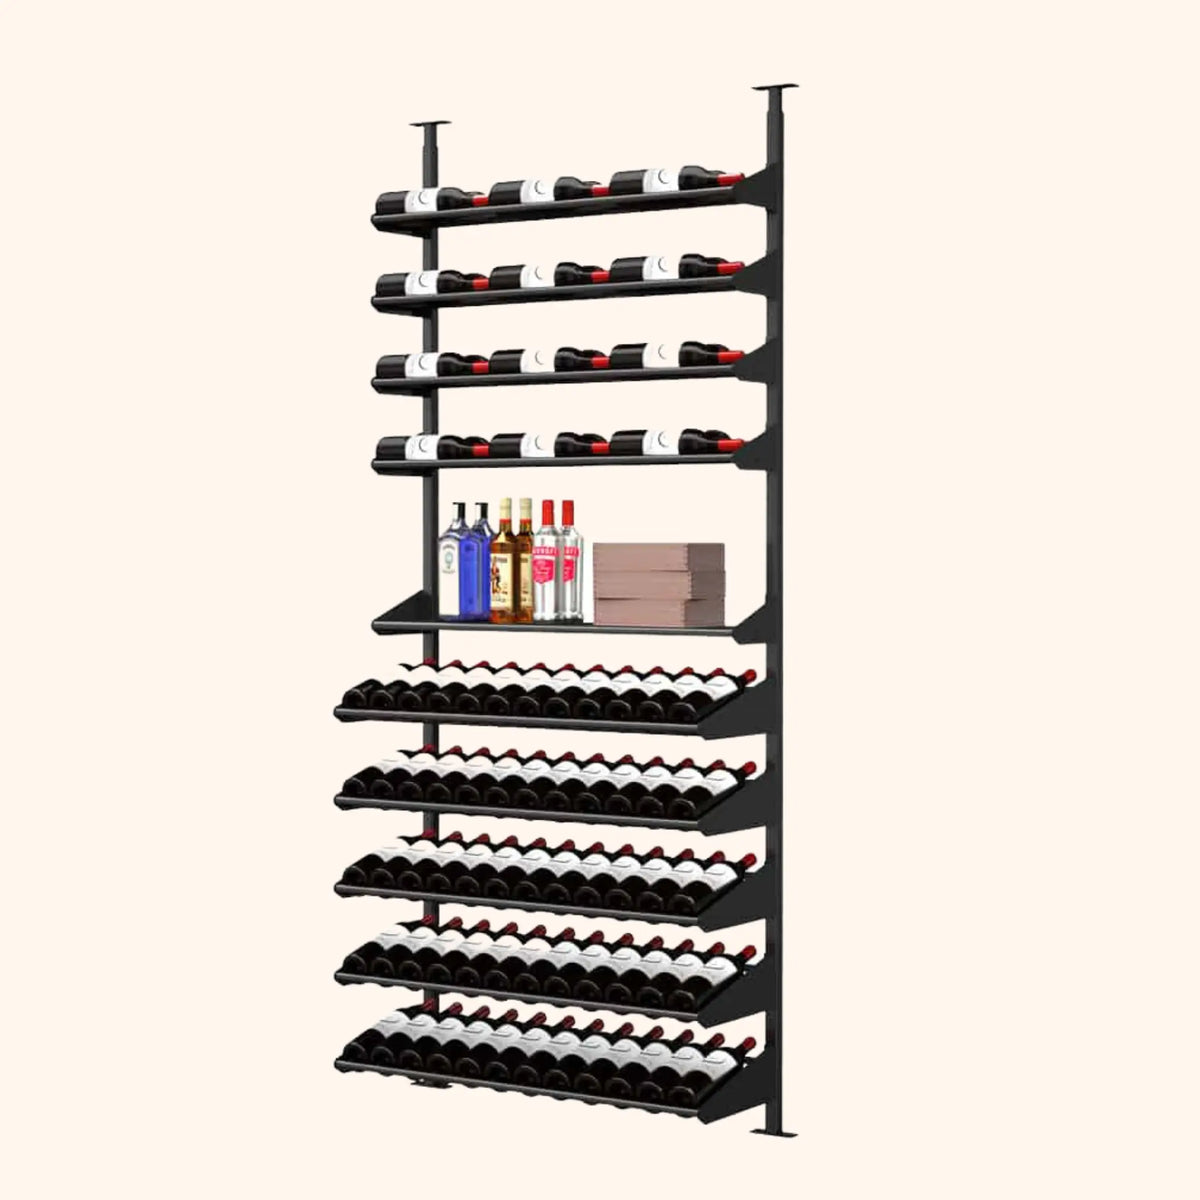 Ultra Wine Racks &amp; Cellars | Showcase Featured Centerpiece Kits (80-100 Bottles) Ultra Wine Racks &amp; Cellars